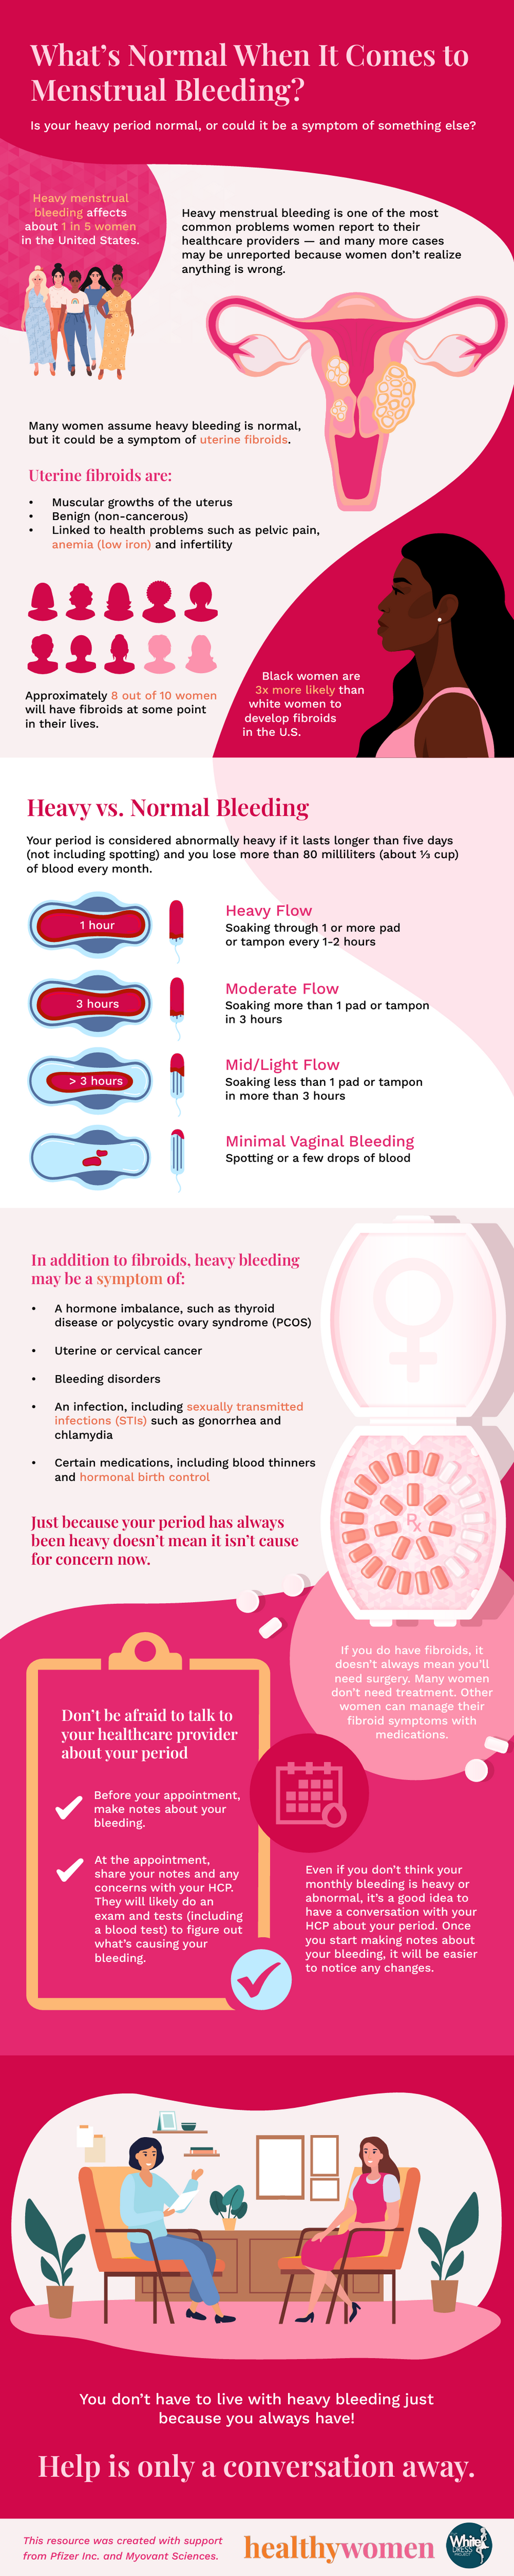 Infographic on heavy menstrual bleeding